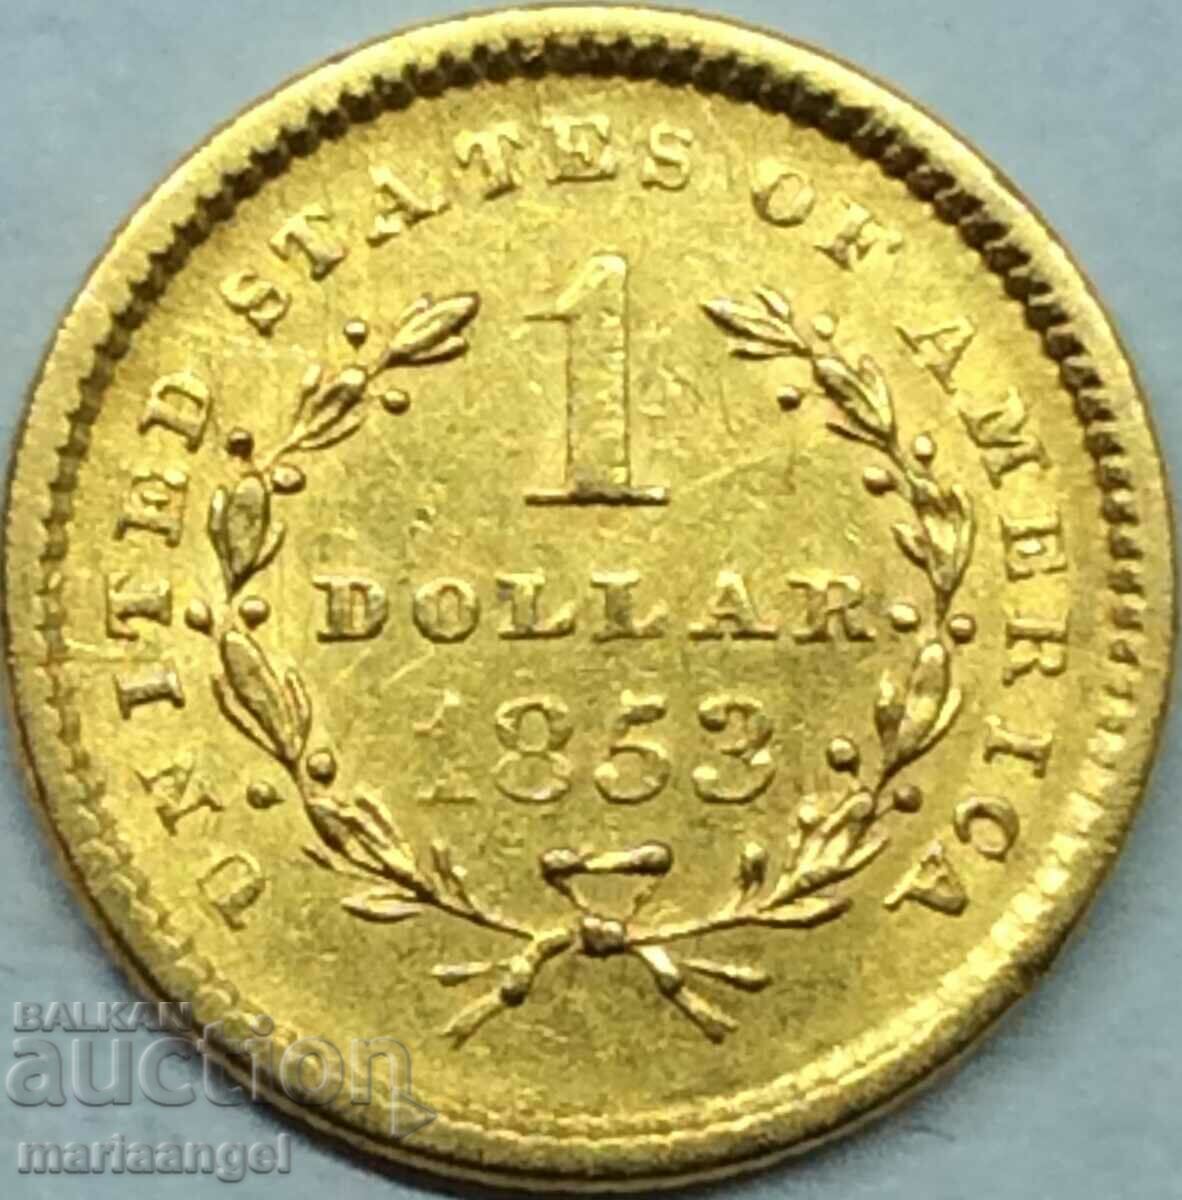 US $1 1853 Liberty Gold - RARE